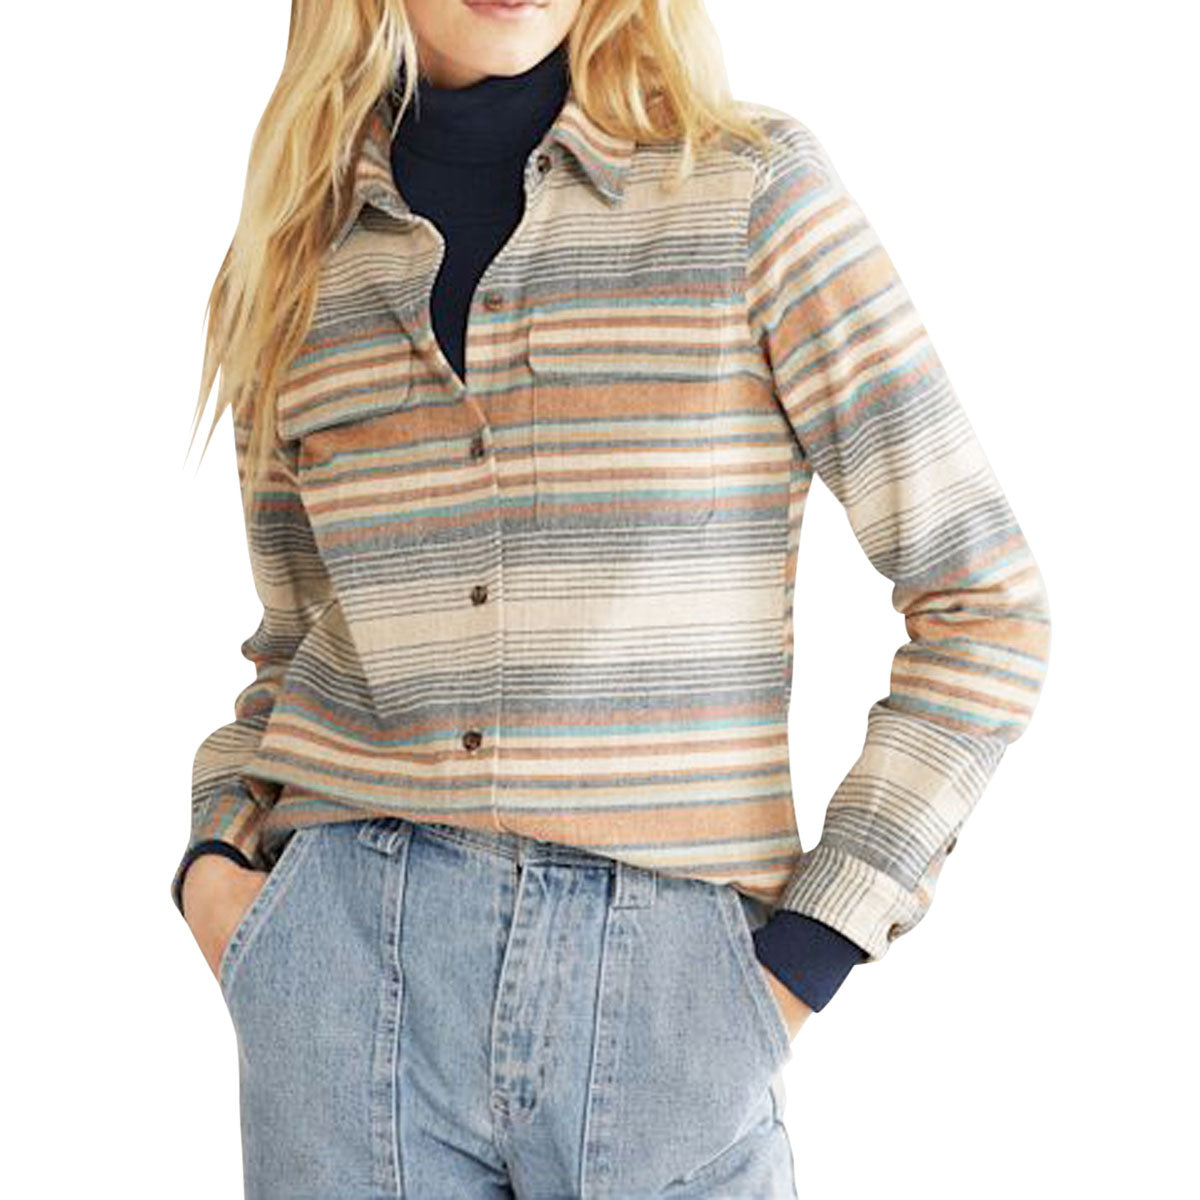 Pendleton Womens Long Sleeve Board Shirt - Tan Multi Stripe image 1